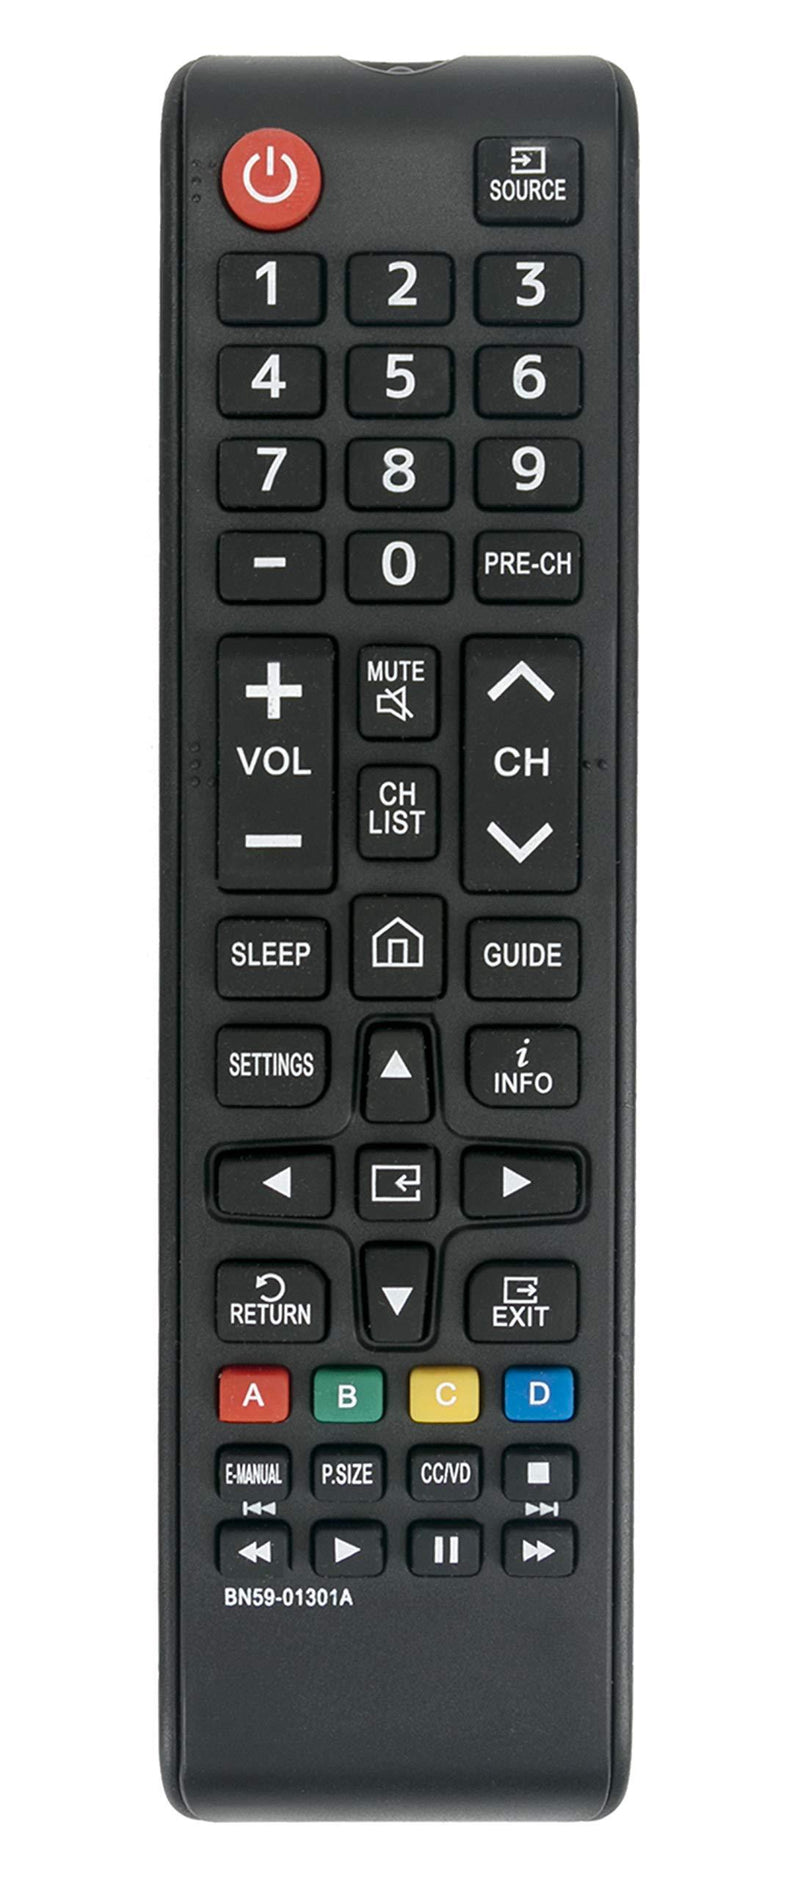 VINABTY BN59-01301A BN5901301A Replaced TV Remote fit for Samsung Smart TV Models NU7100 NU6900 NU7300 N5300 Series